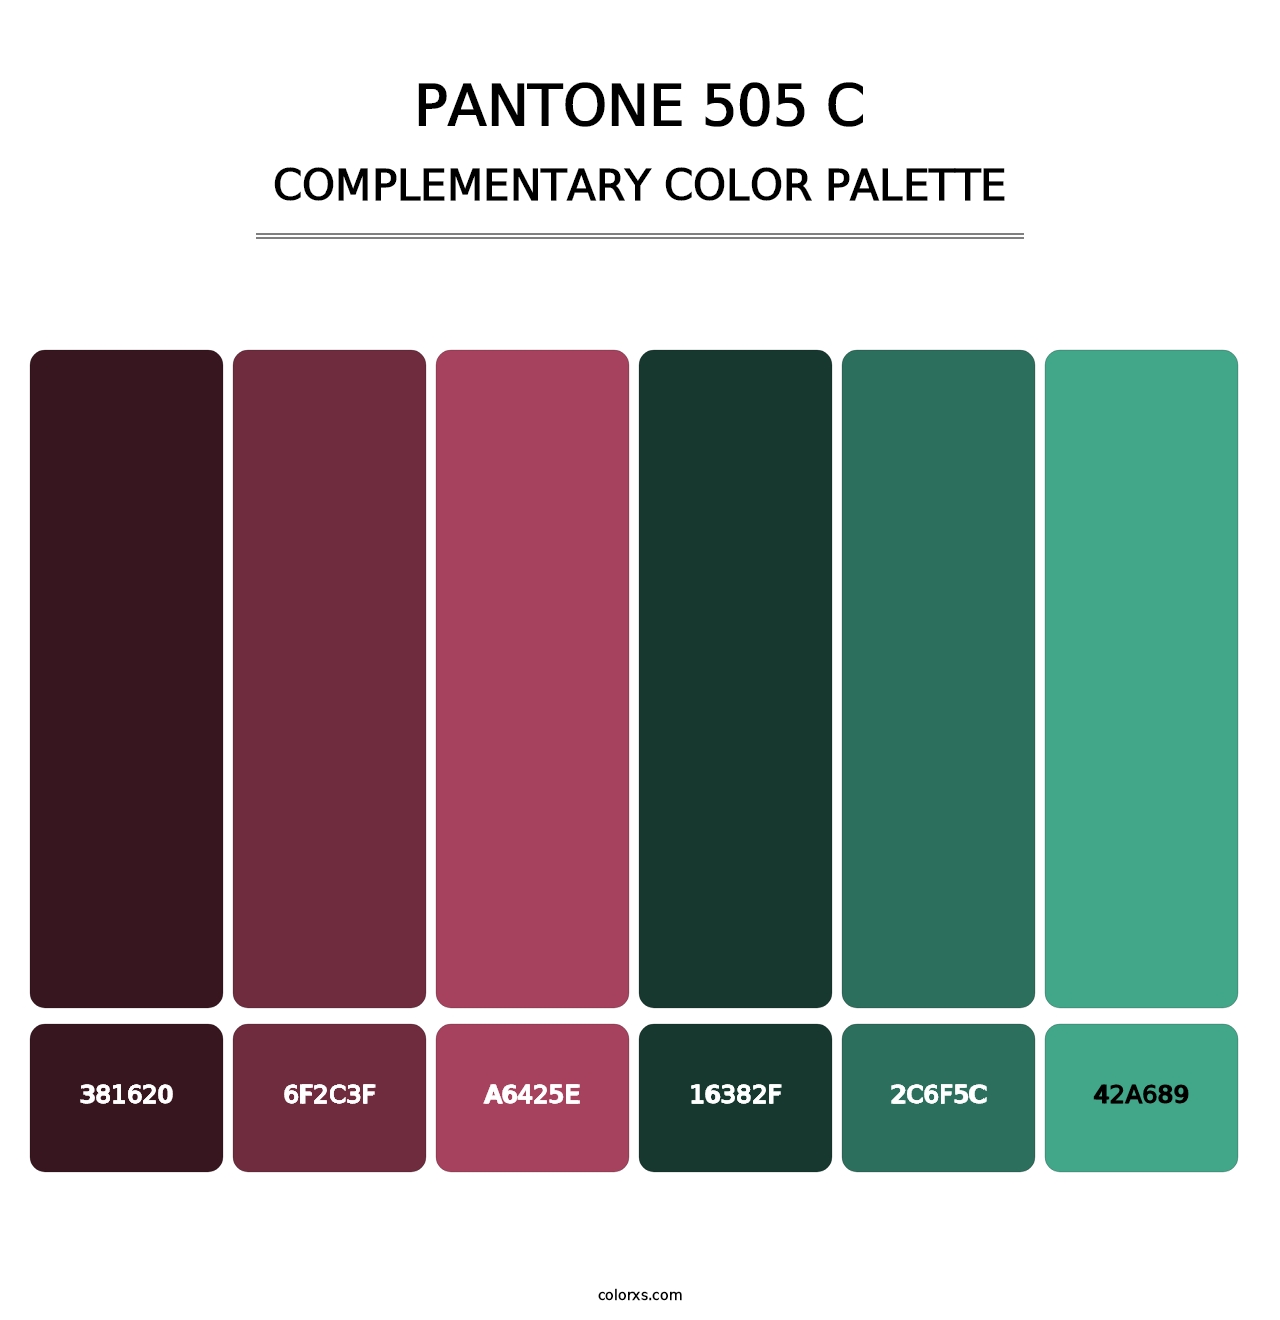 PANTONE 505 C - Complementary Color Palette